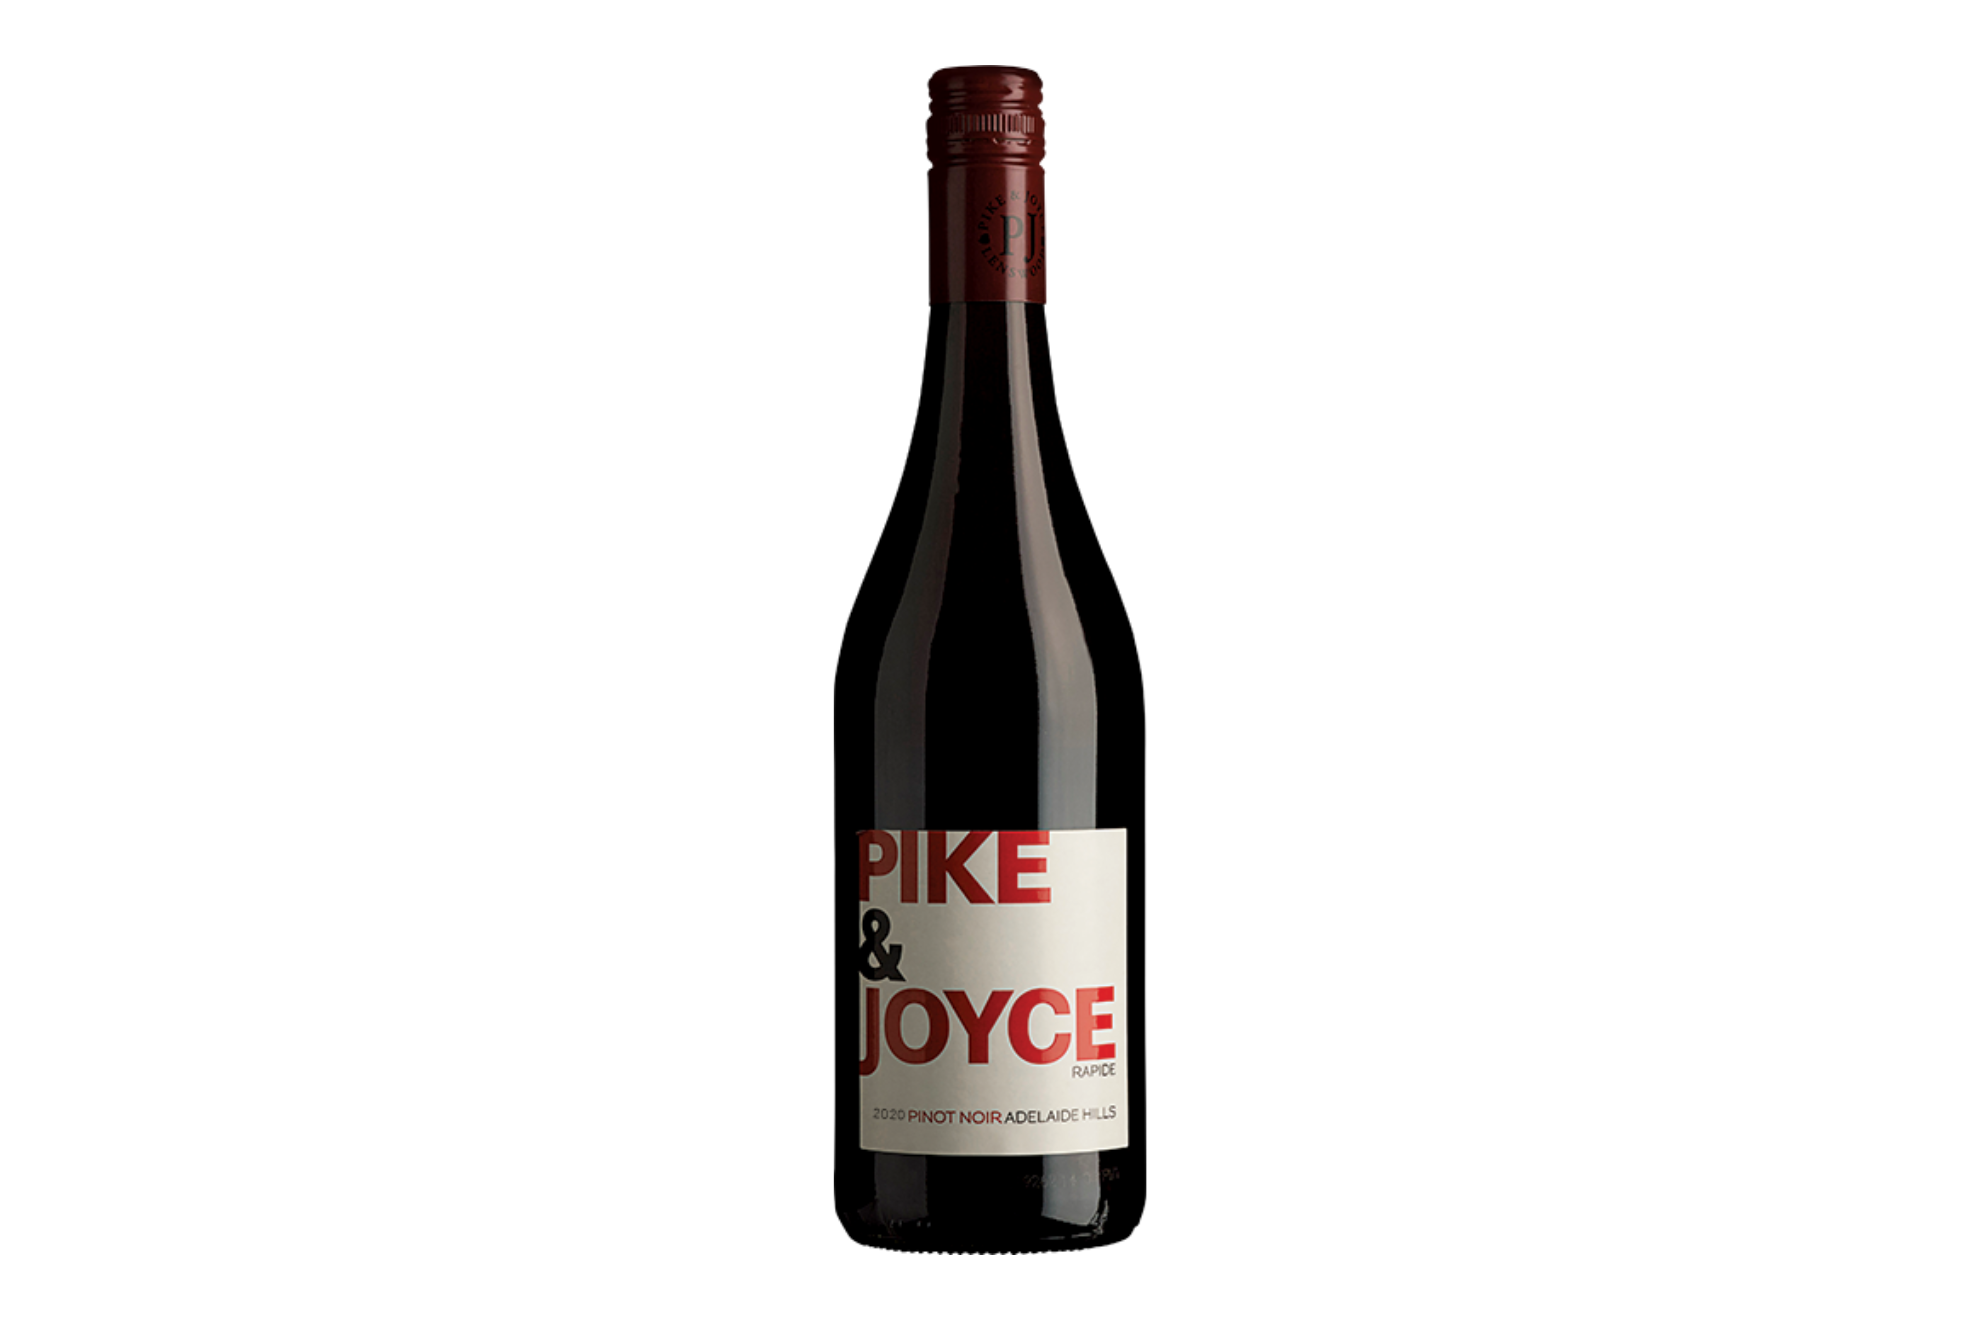 Pike & Joyce Rapide Pinot Noir Adelaide Hills 2021